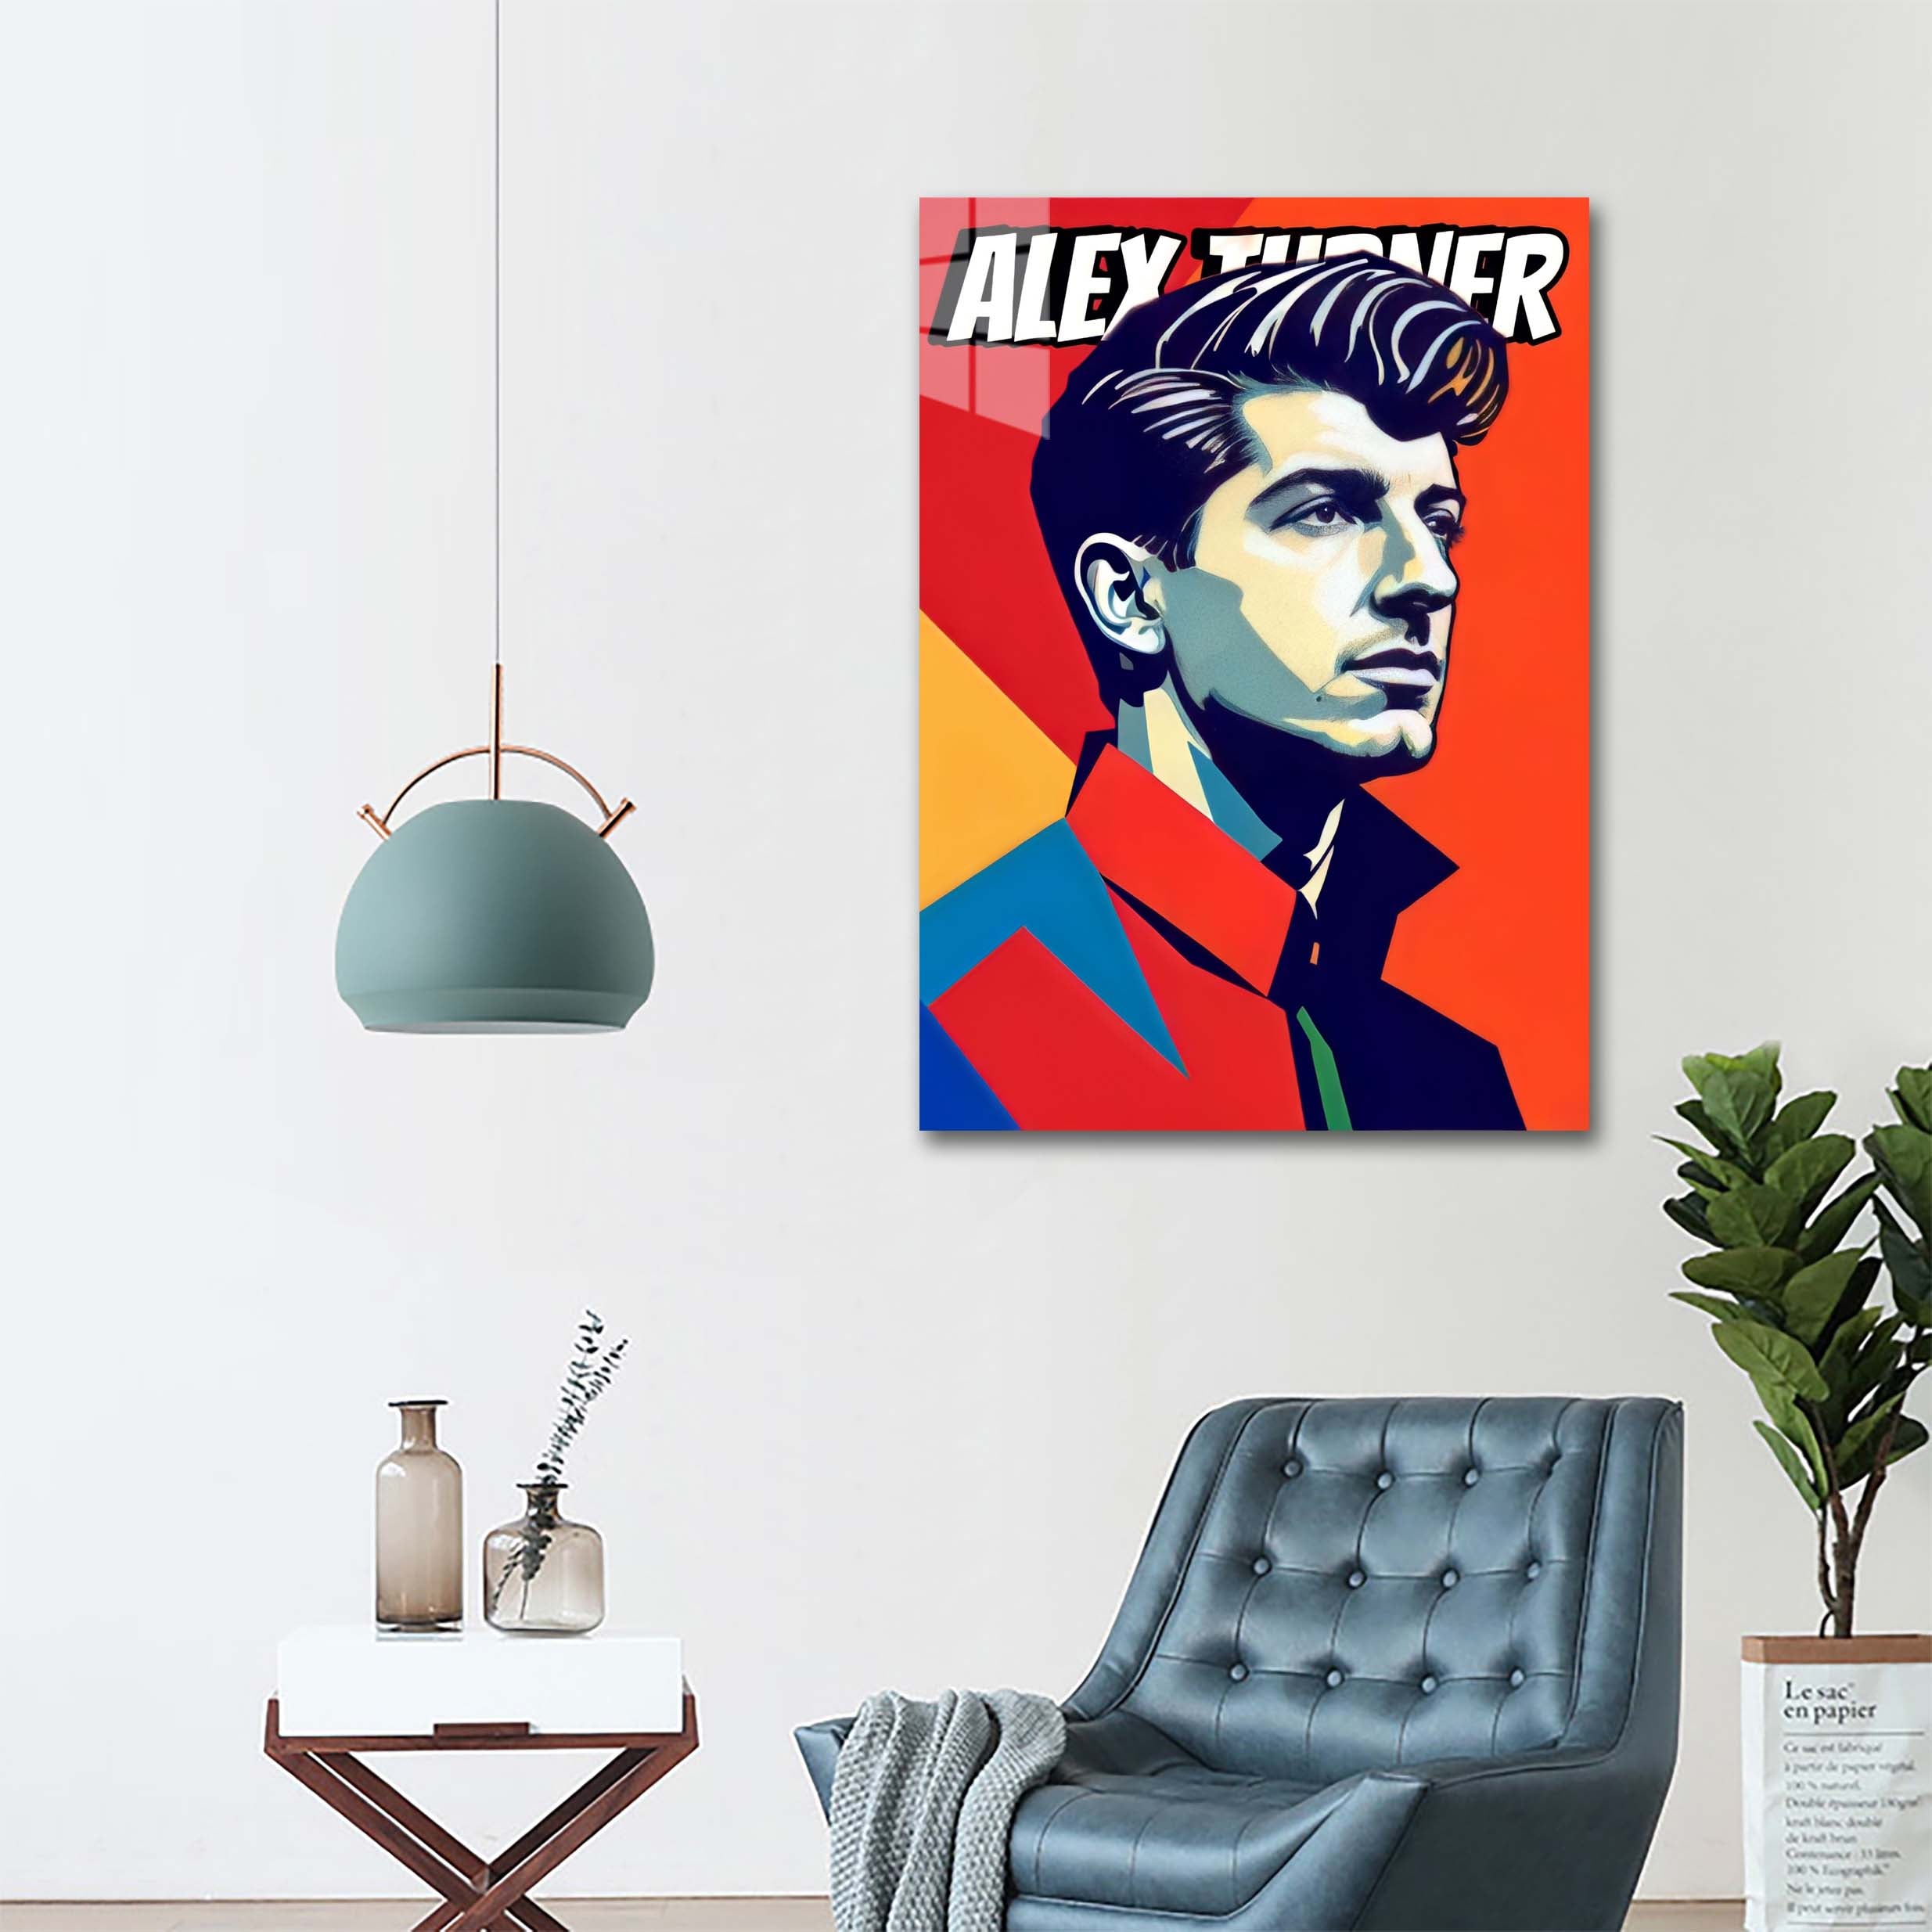 Alex Turner - Pop art-designed by @ALTAY